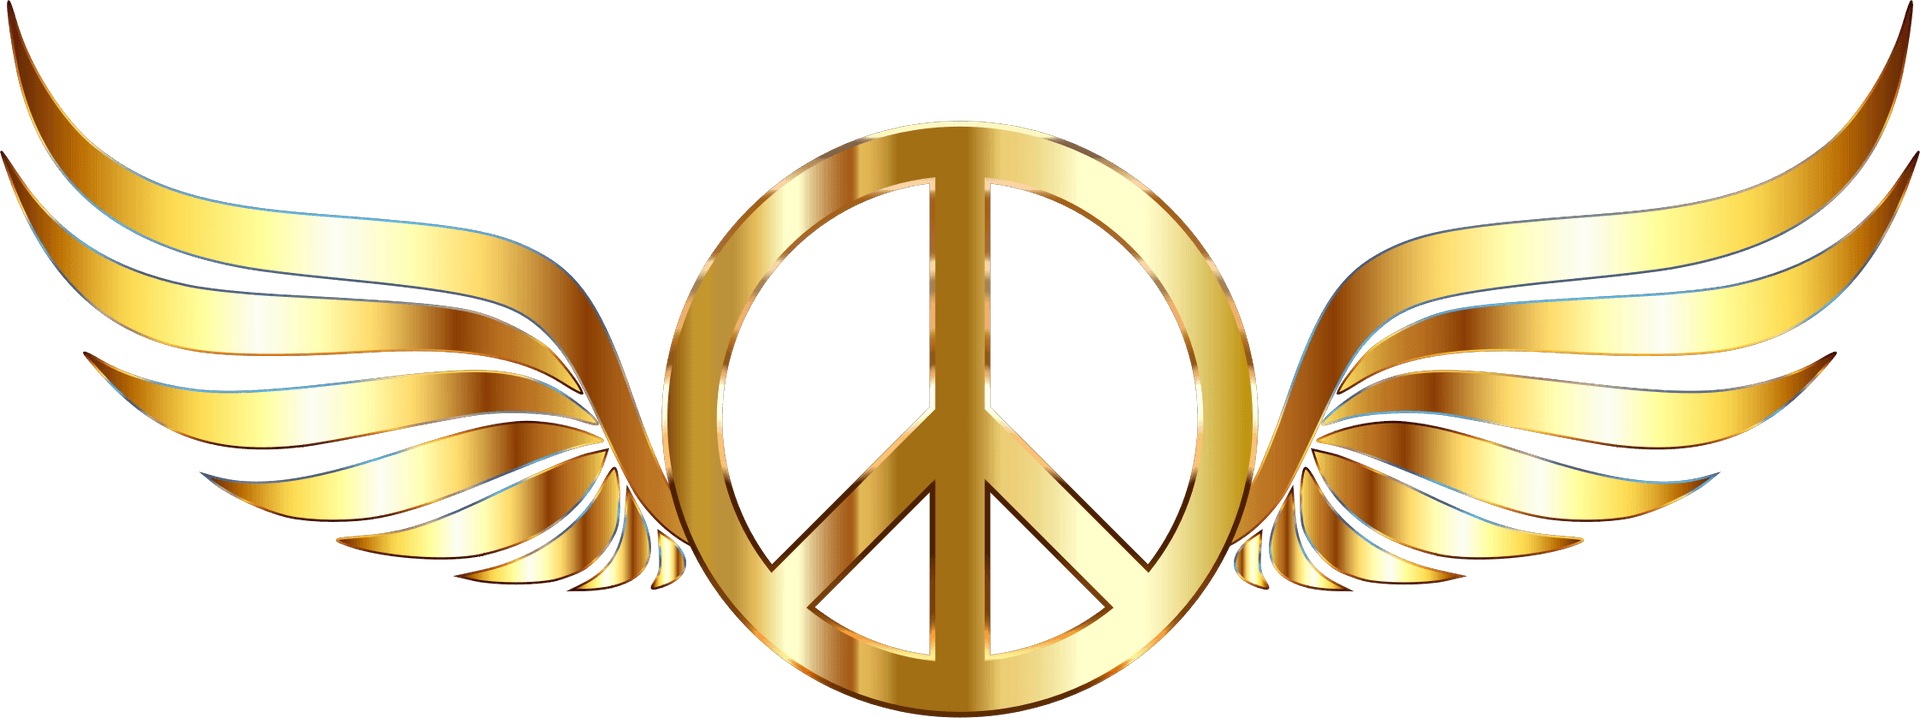 Golden Peace Symbol Wings Logo PNG